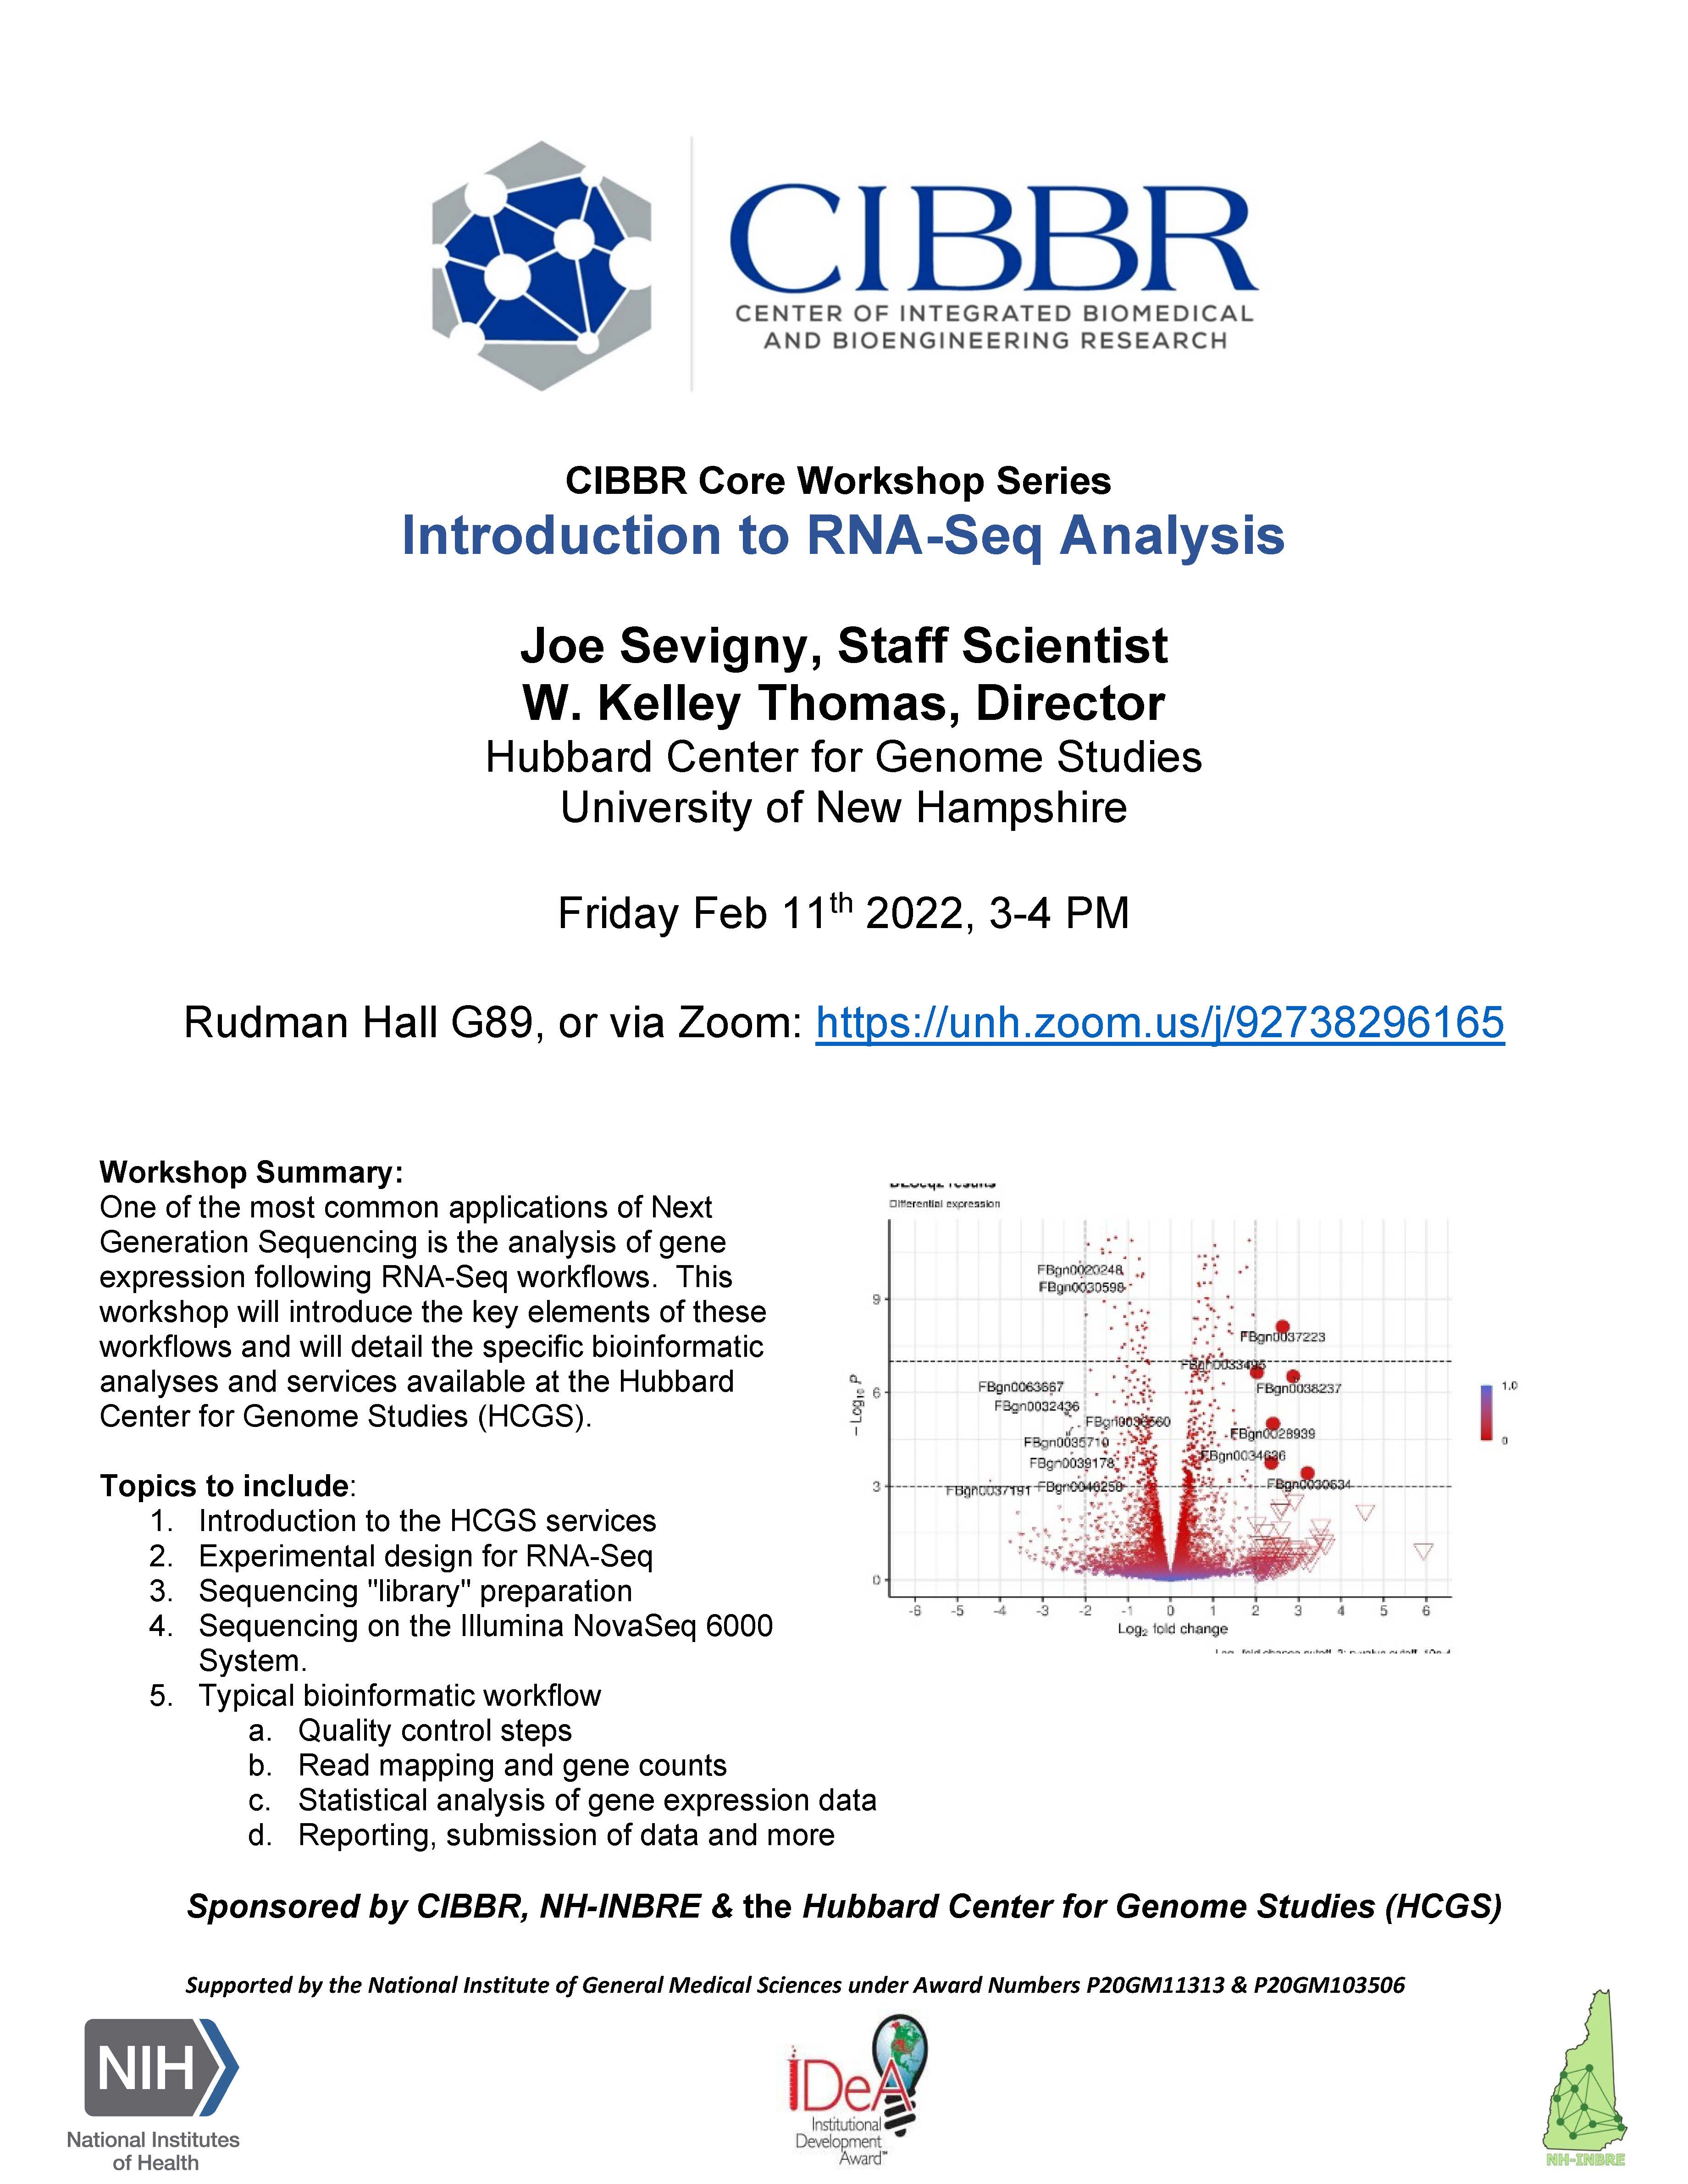 Introduction to RNA-Seq Analysis Workshop